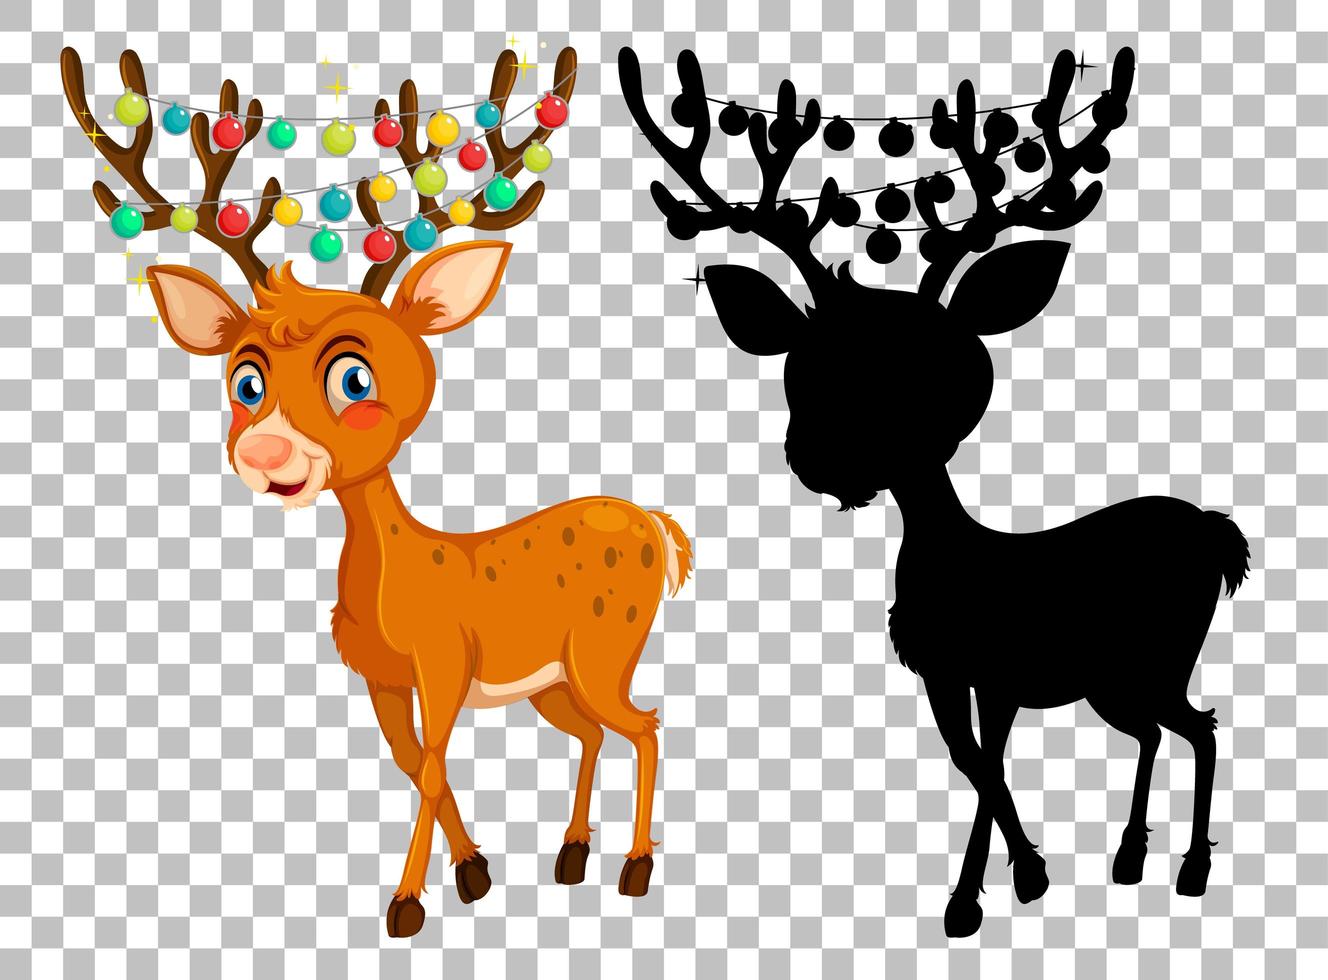 Set of Christmas deer cartoon and silhouette vector